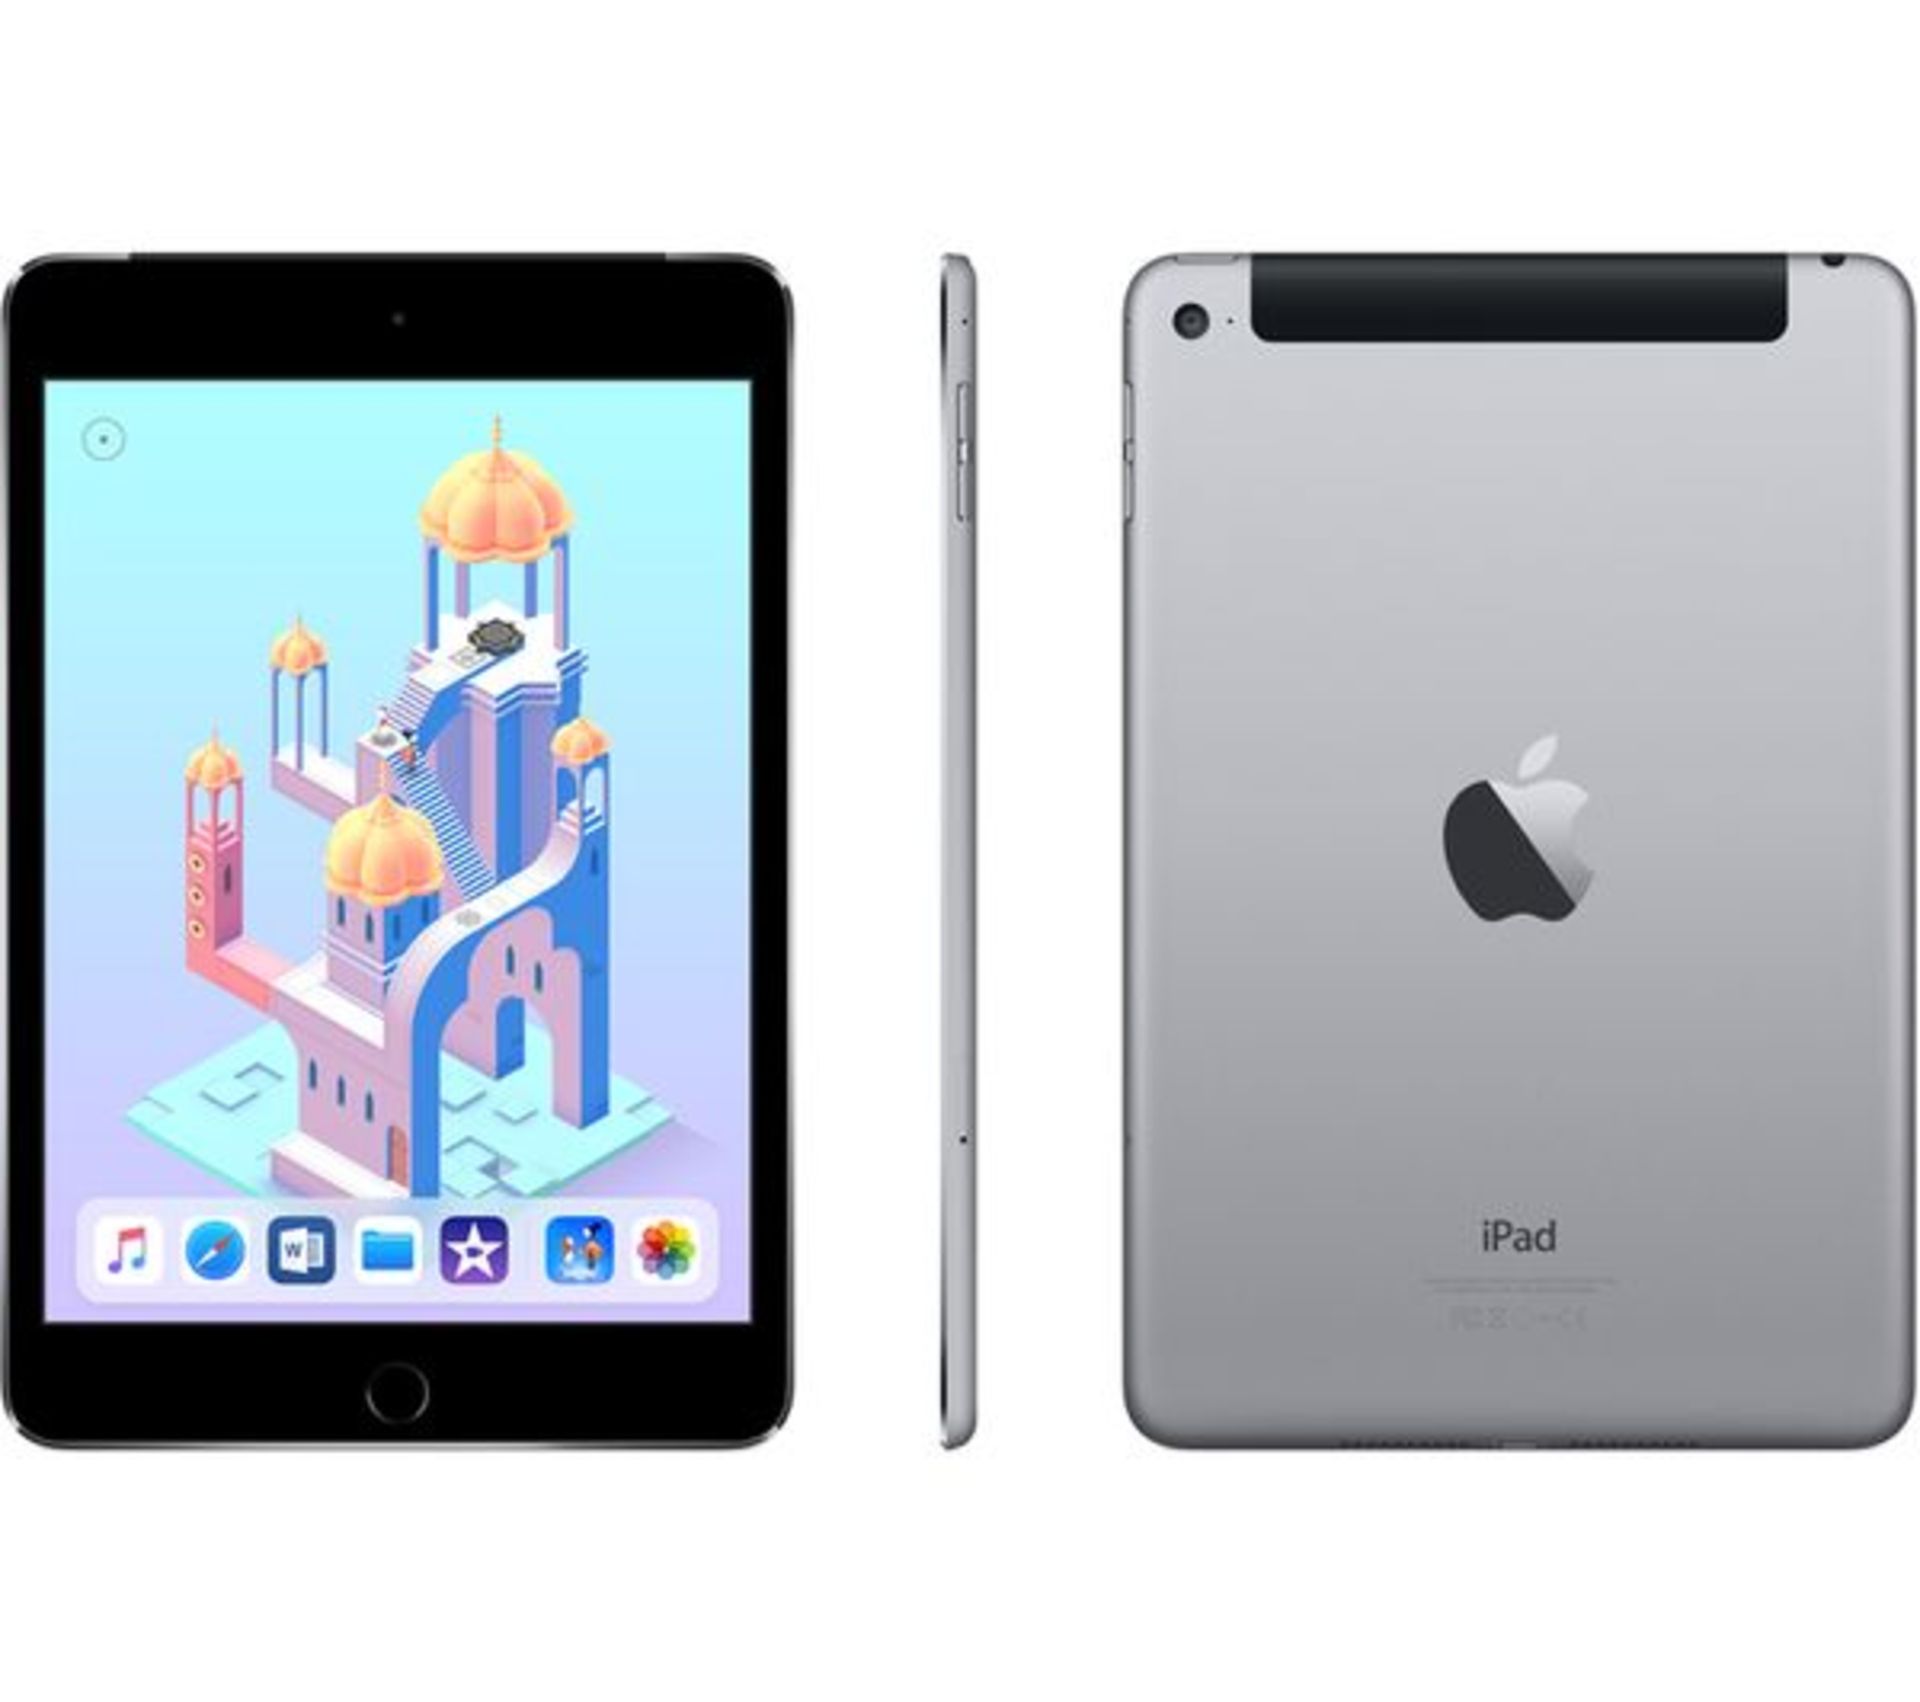 1 x Apple iPad Mini 4 Cellular - 128gb in Space Grey - Model MK8D2B/A - A8 Processor - 7.9" Screen - Image 2 of 4